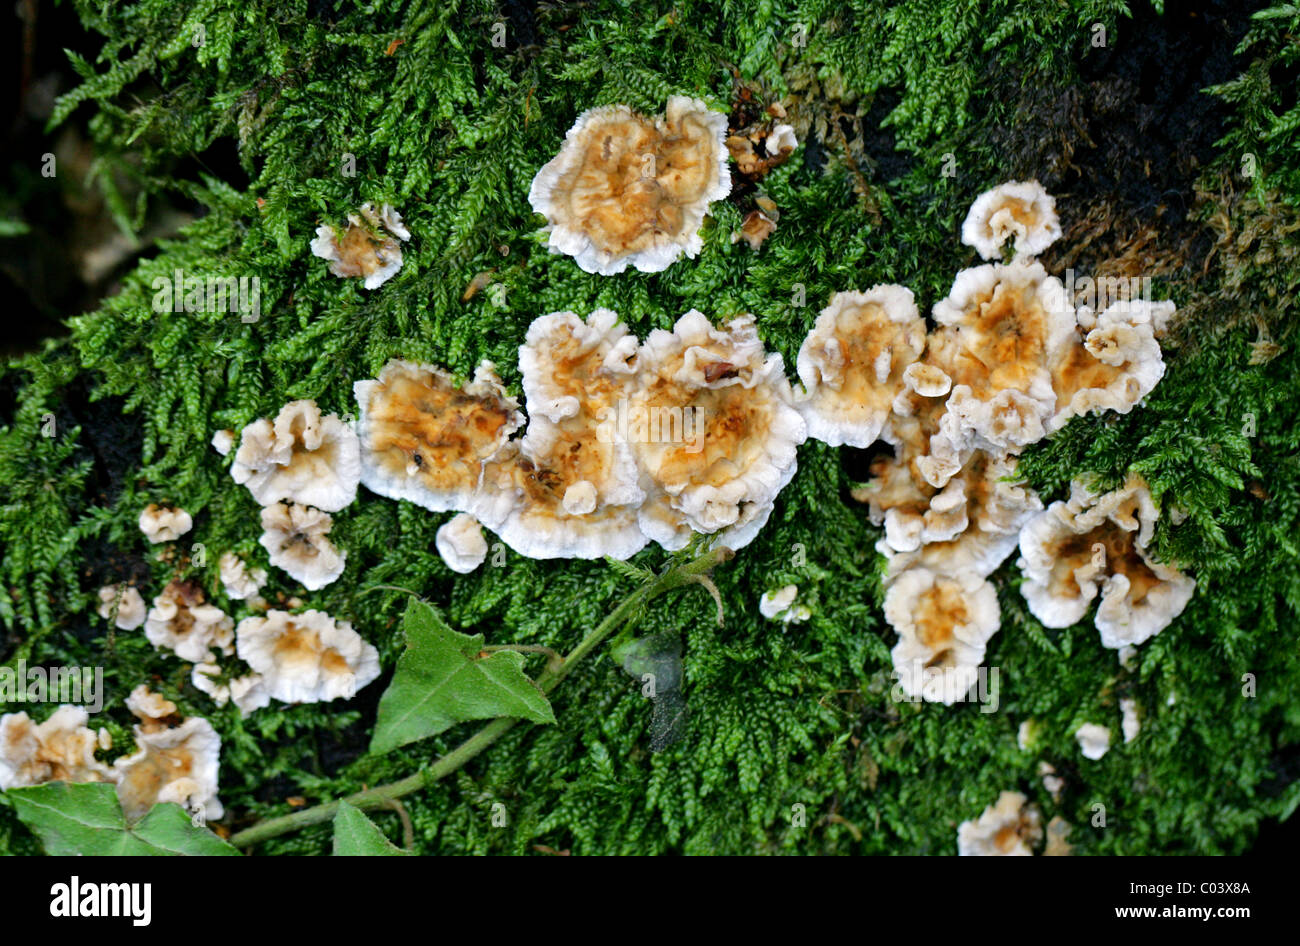 Blushing Rosette, Abortiporus biennis, Meruliaceae. Growing on a Moss Covered Tree Stump. Berkhamsted, Hertfordshire. Stock Photo